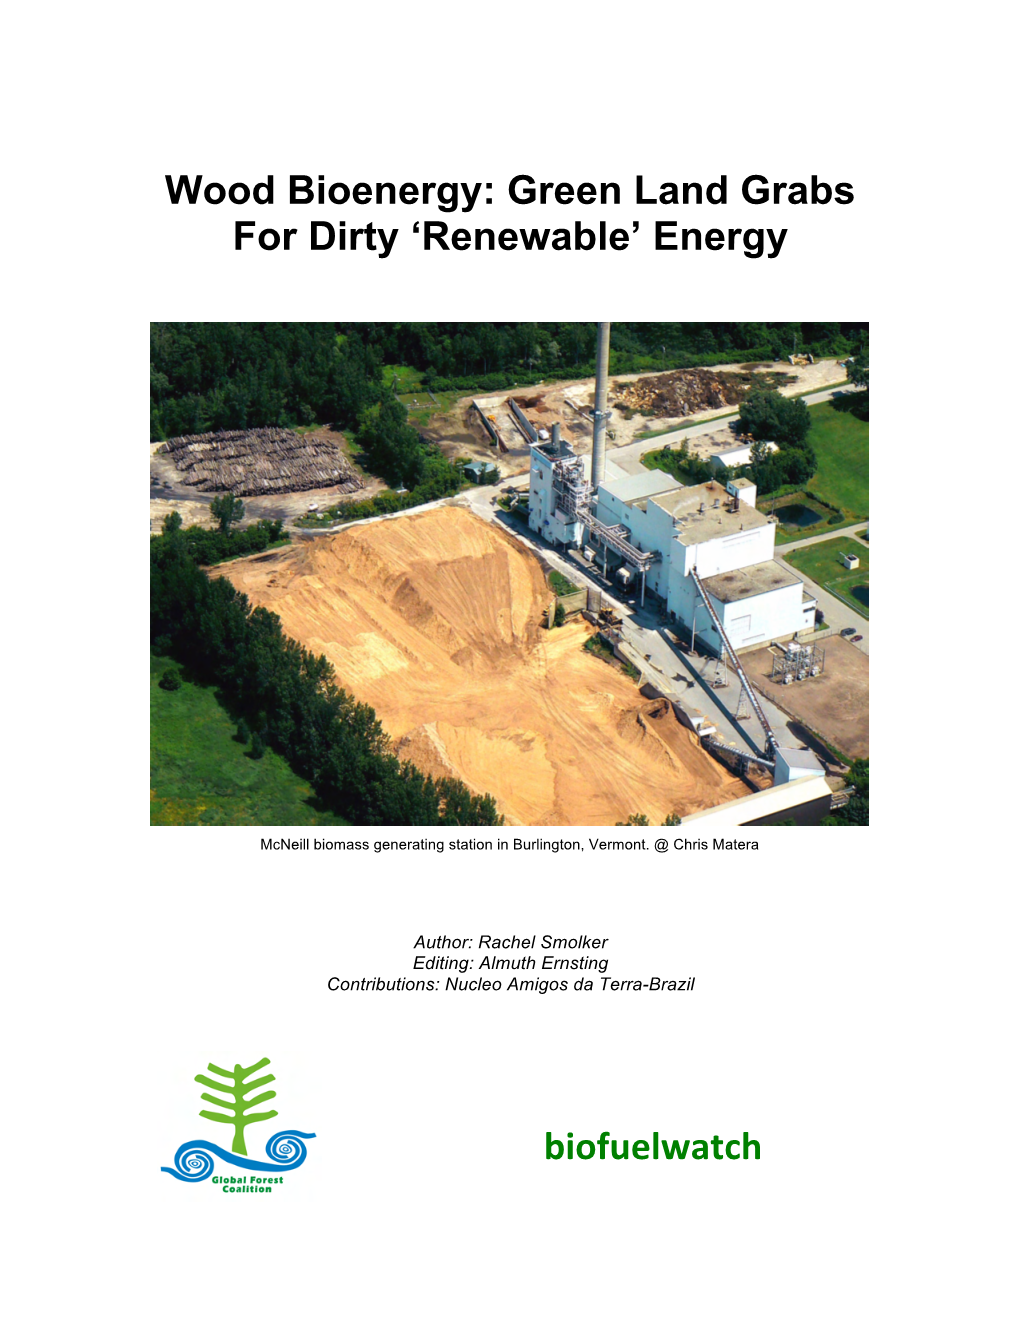 Wood Bioenergy: Green Land Grabs for Dirty 'Renewable' Energy